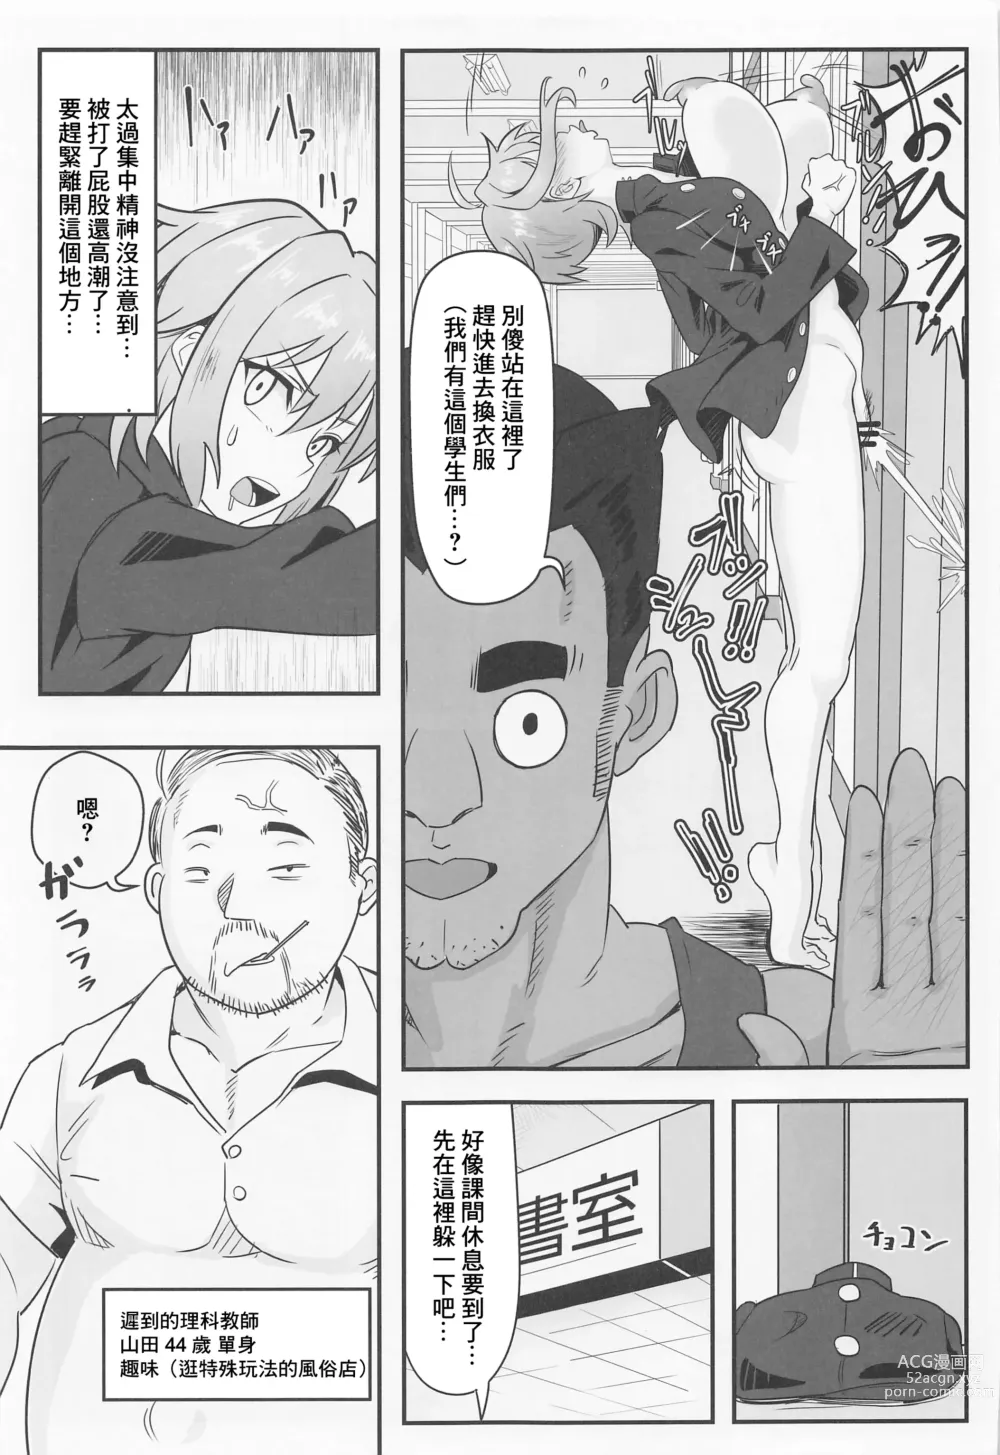 Page 26 of doujinshi Kiri-chan no Danshikounai Roshutsu Haikai Quest